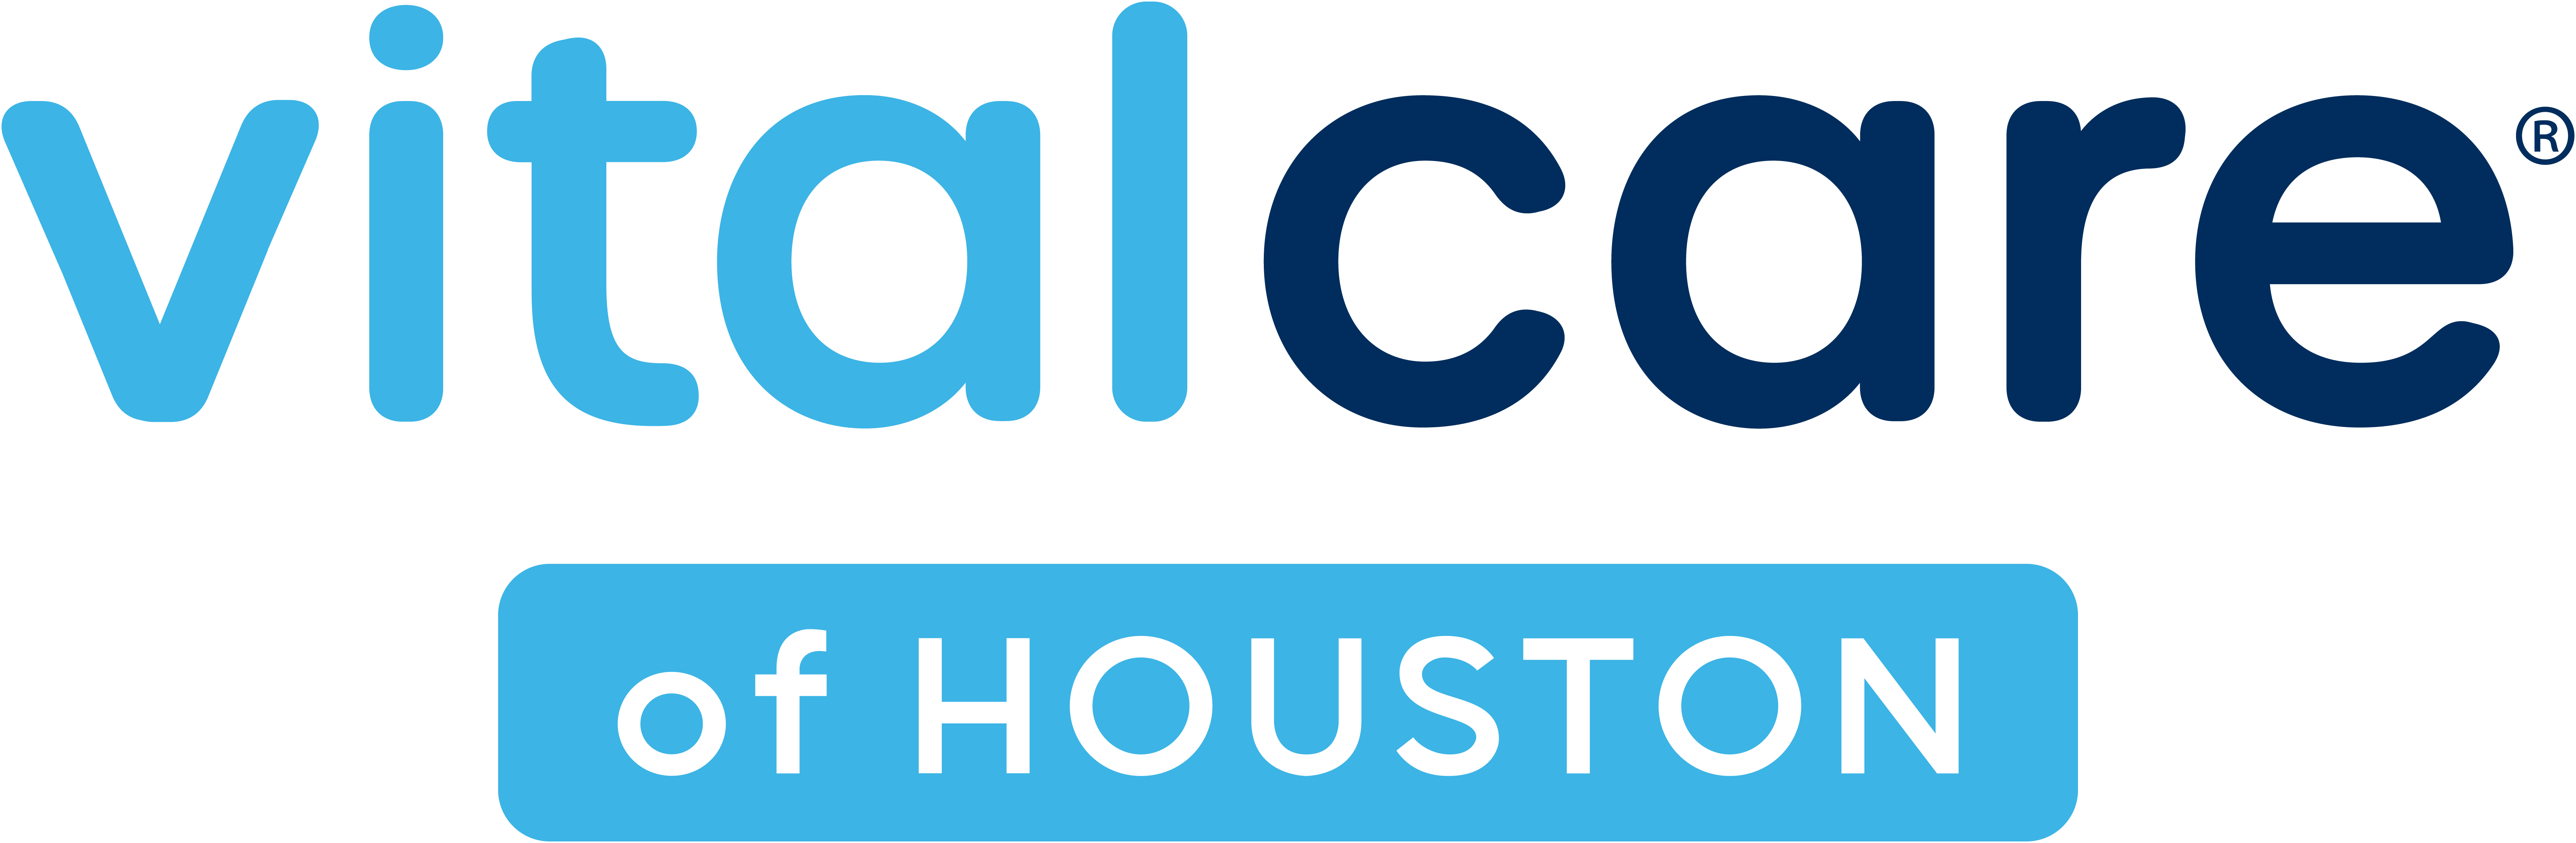 Vital Care of Houston Logo